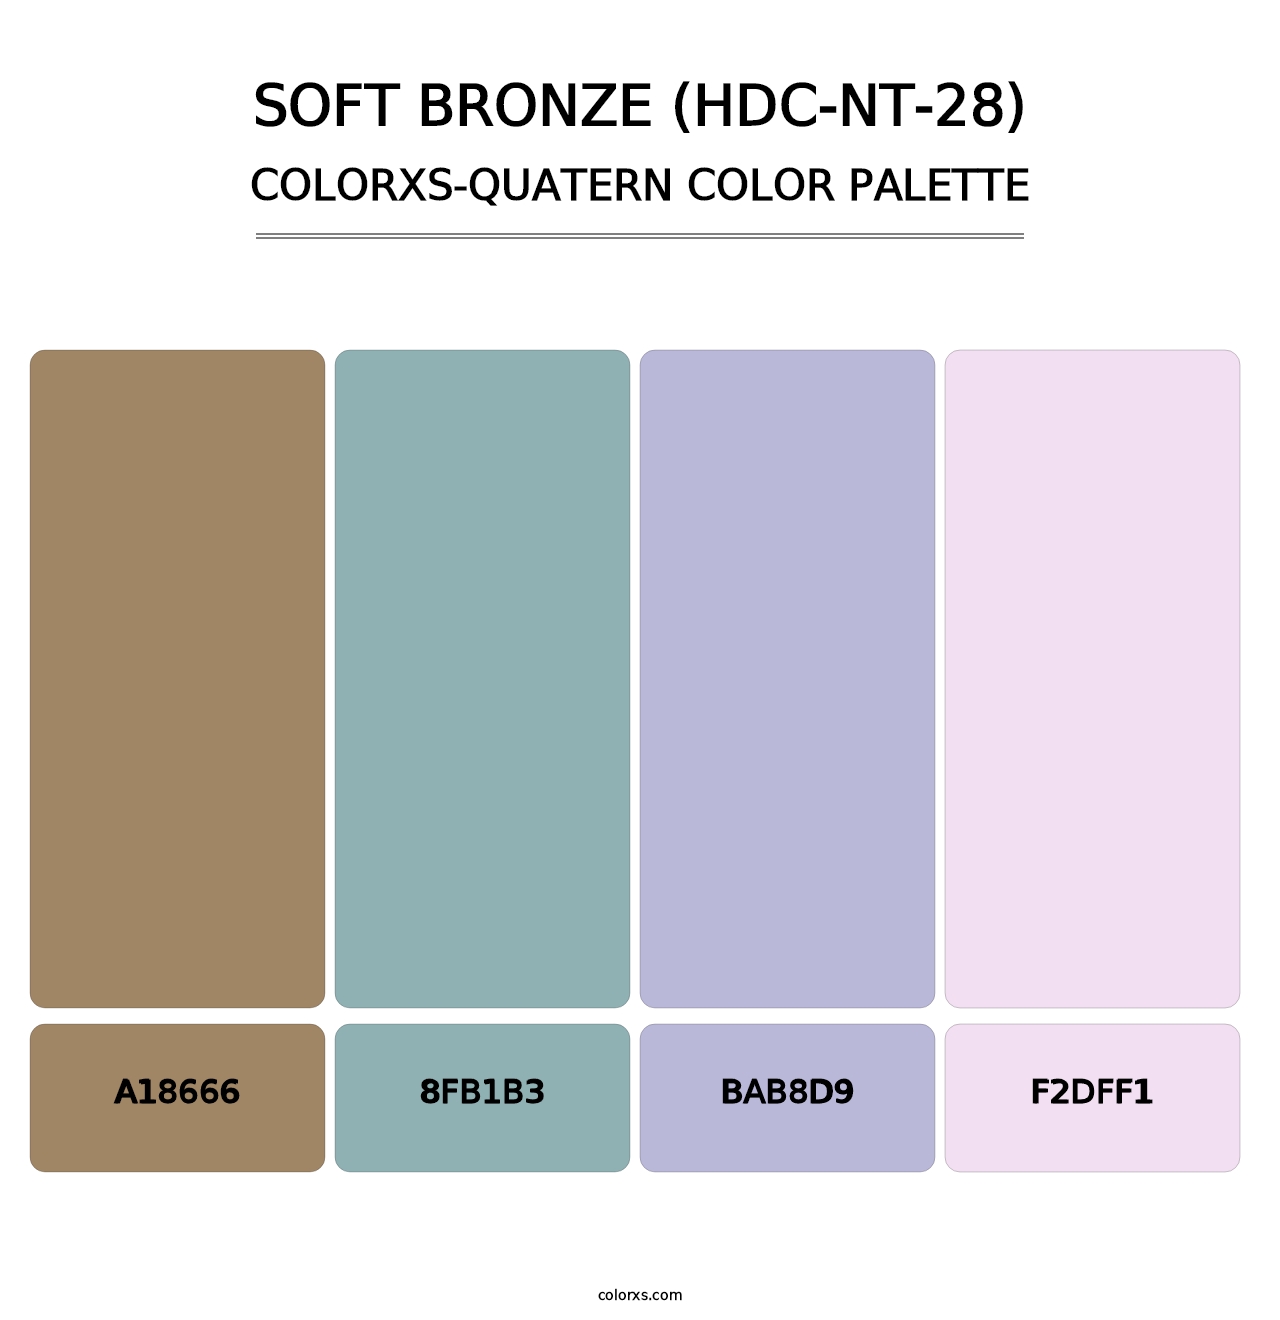 Soft Bronze (HDC-NT-28) - Colorxs Quatern Palette